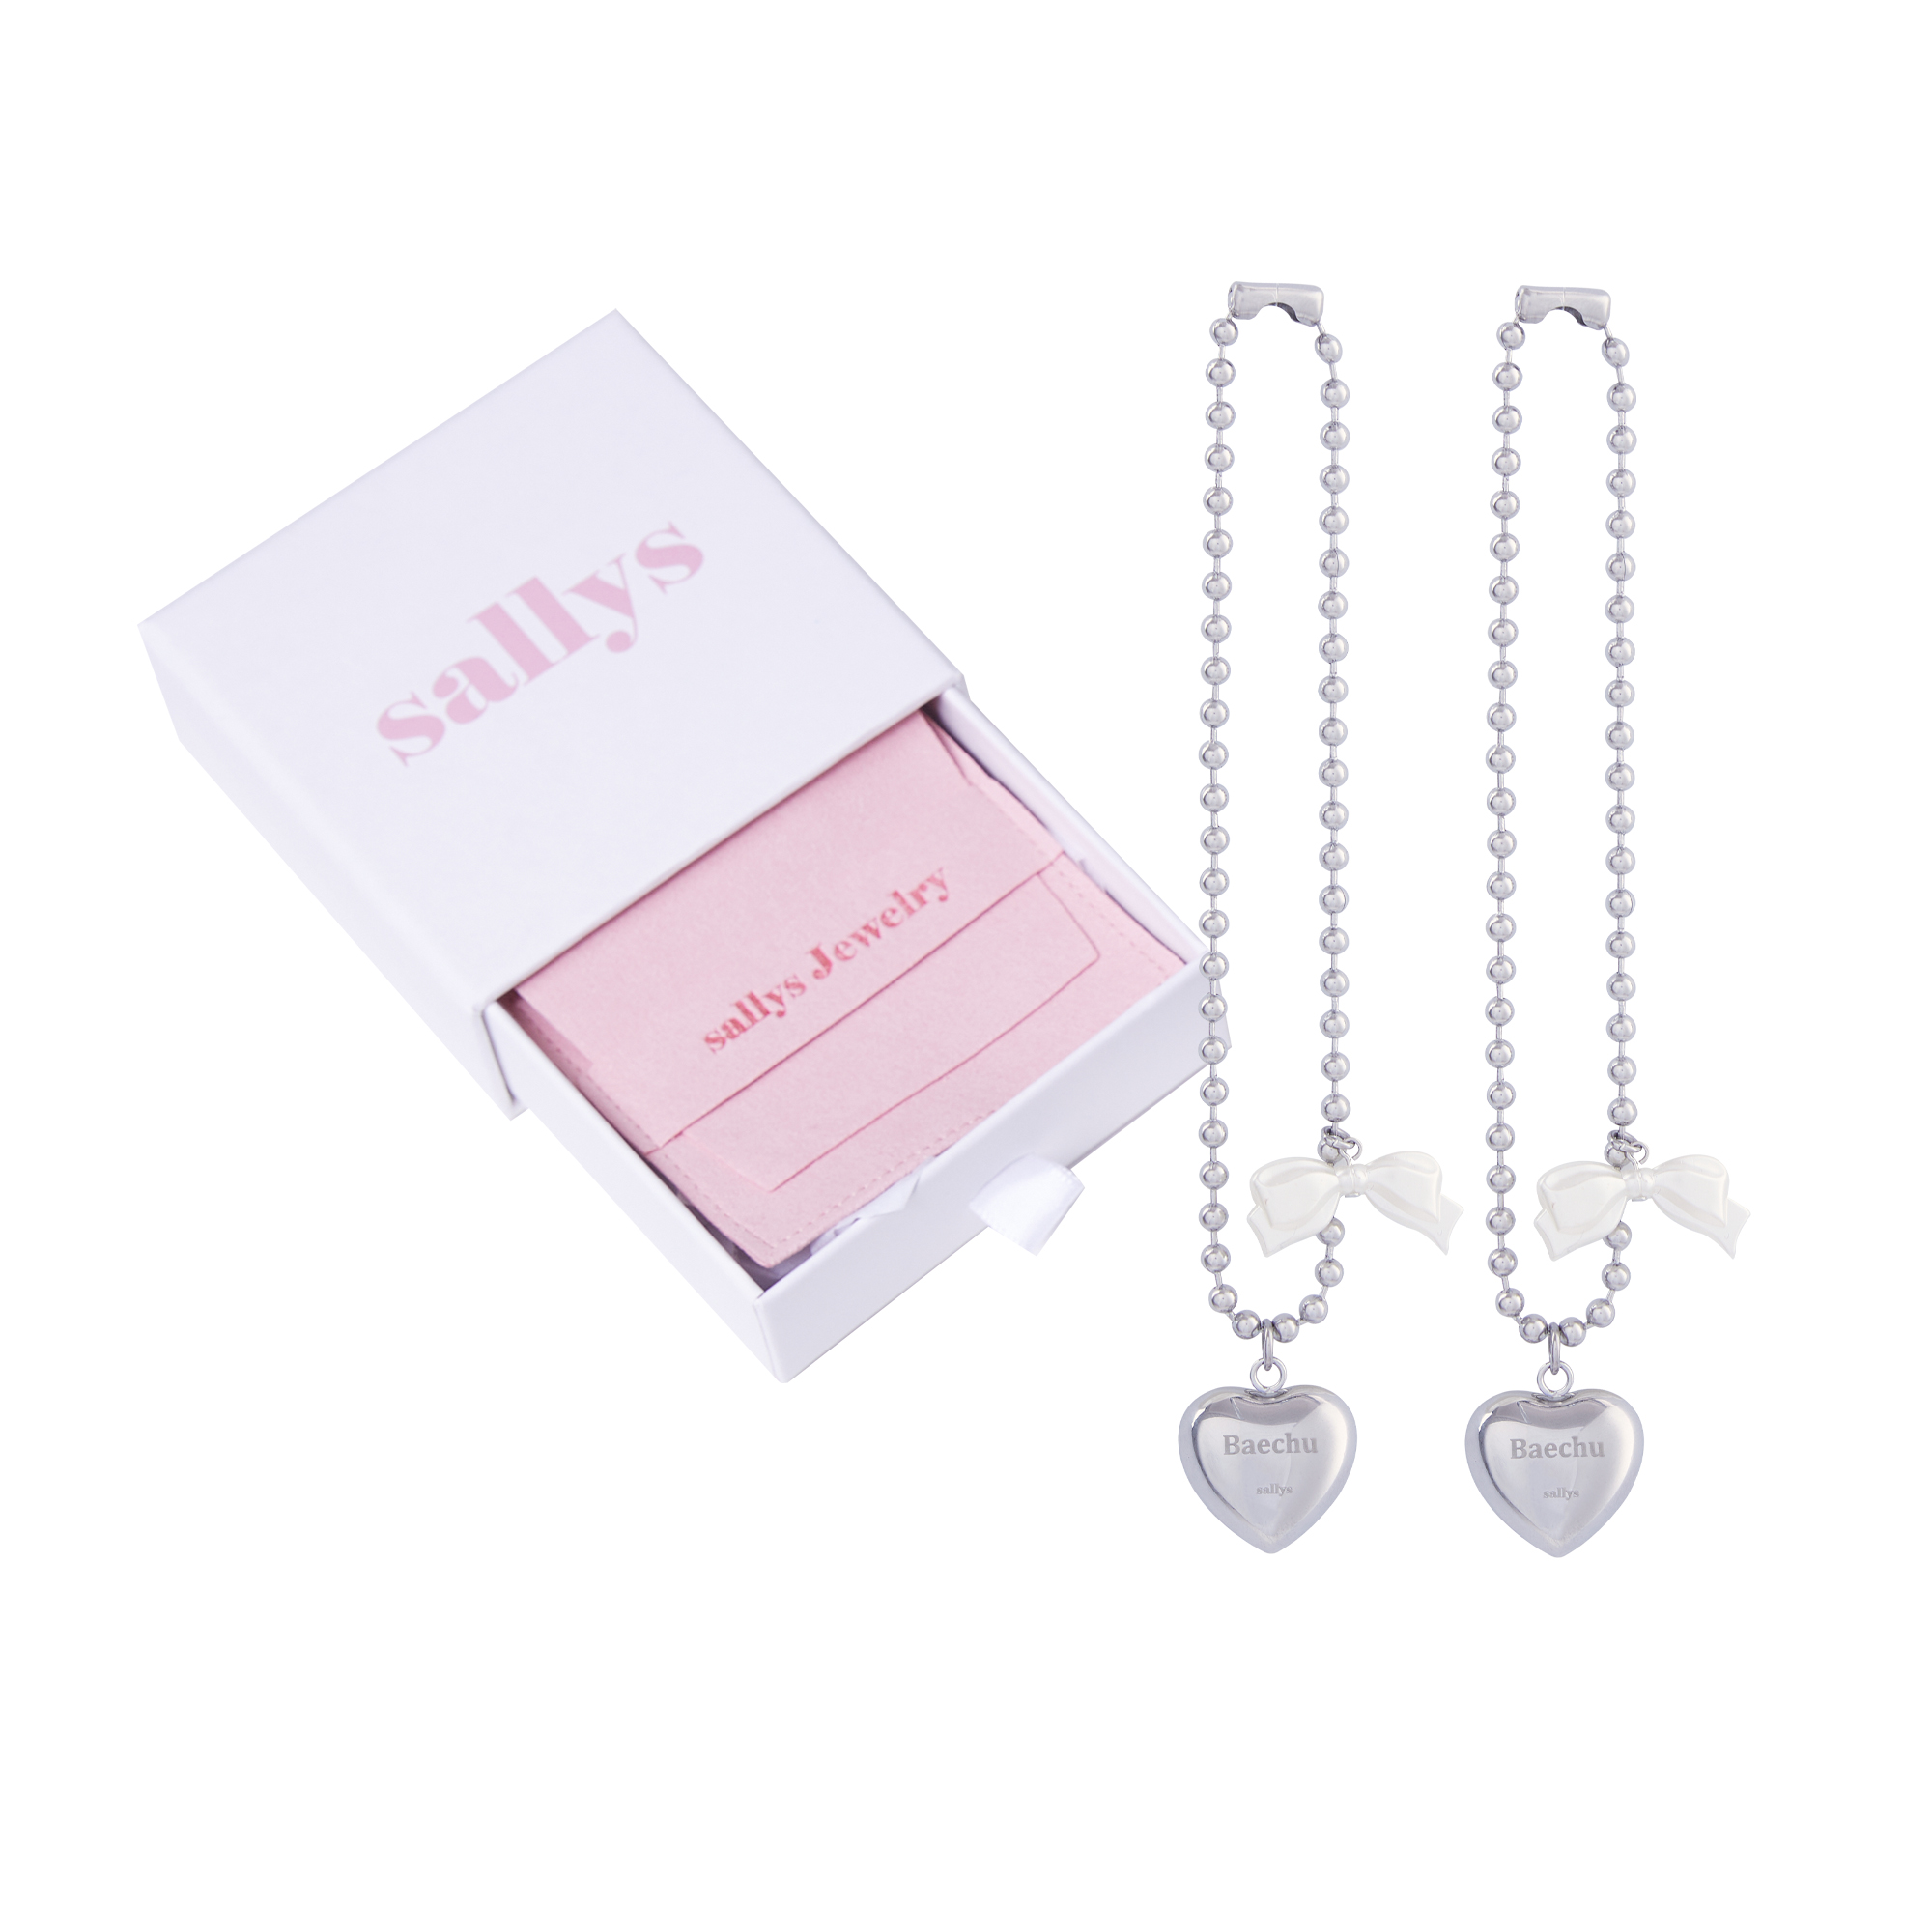 Shine heart naming necklace package (Human/dog 2set)